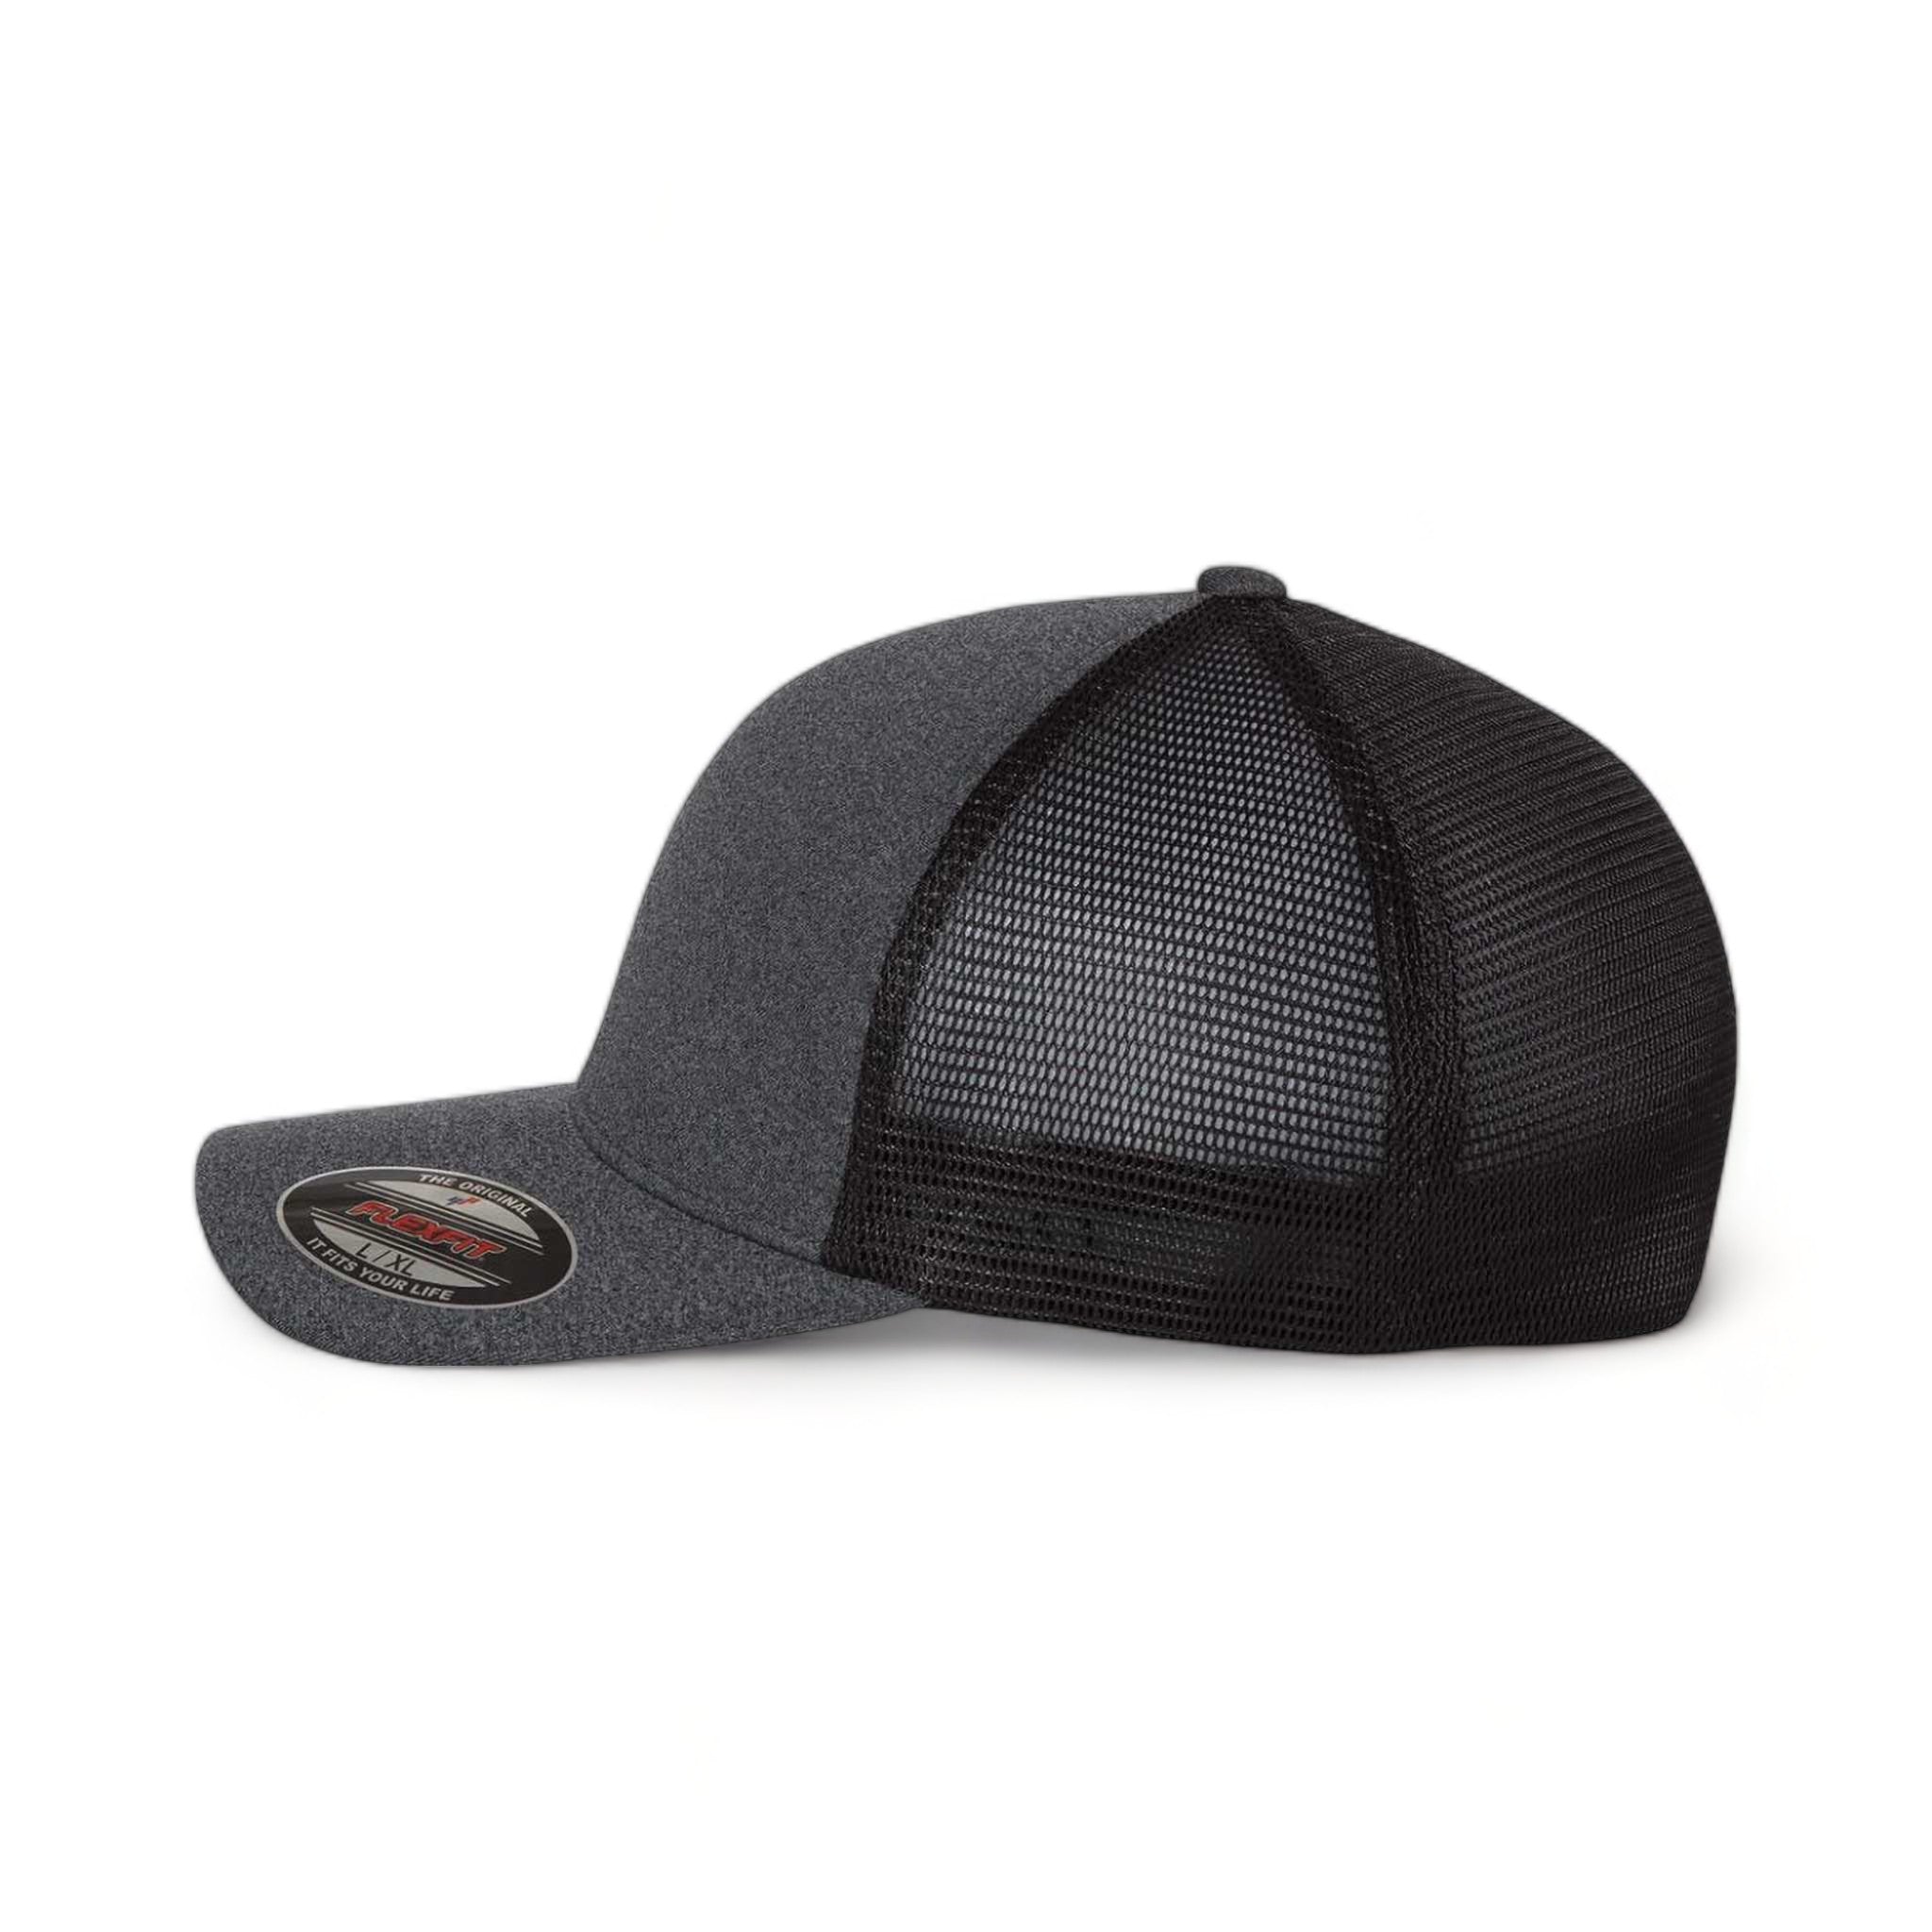 Side view of Flexfit 5511UP custom hat in mélange dark grey and black